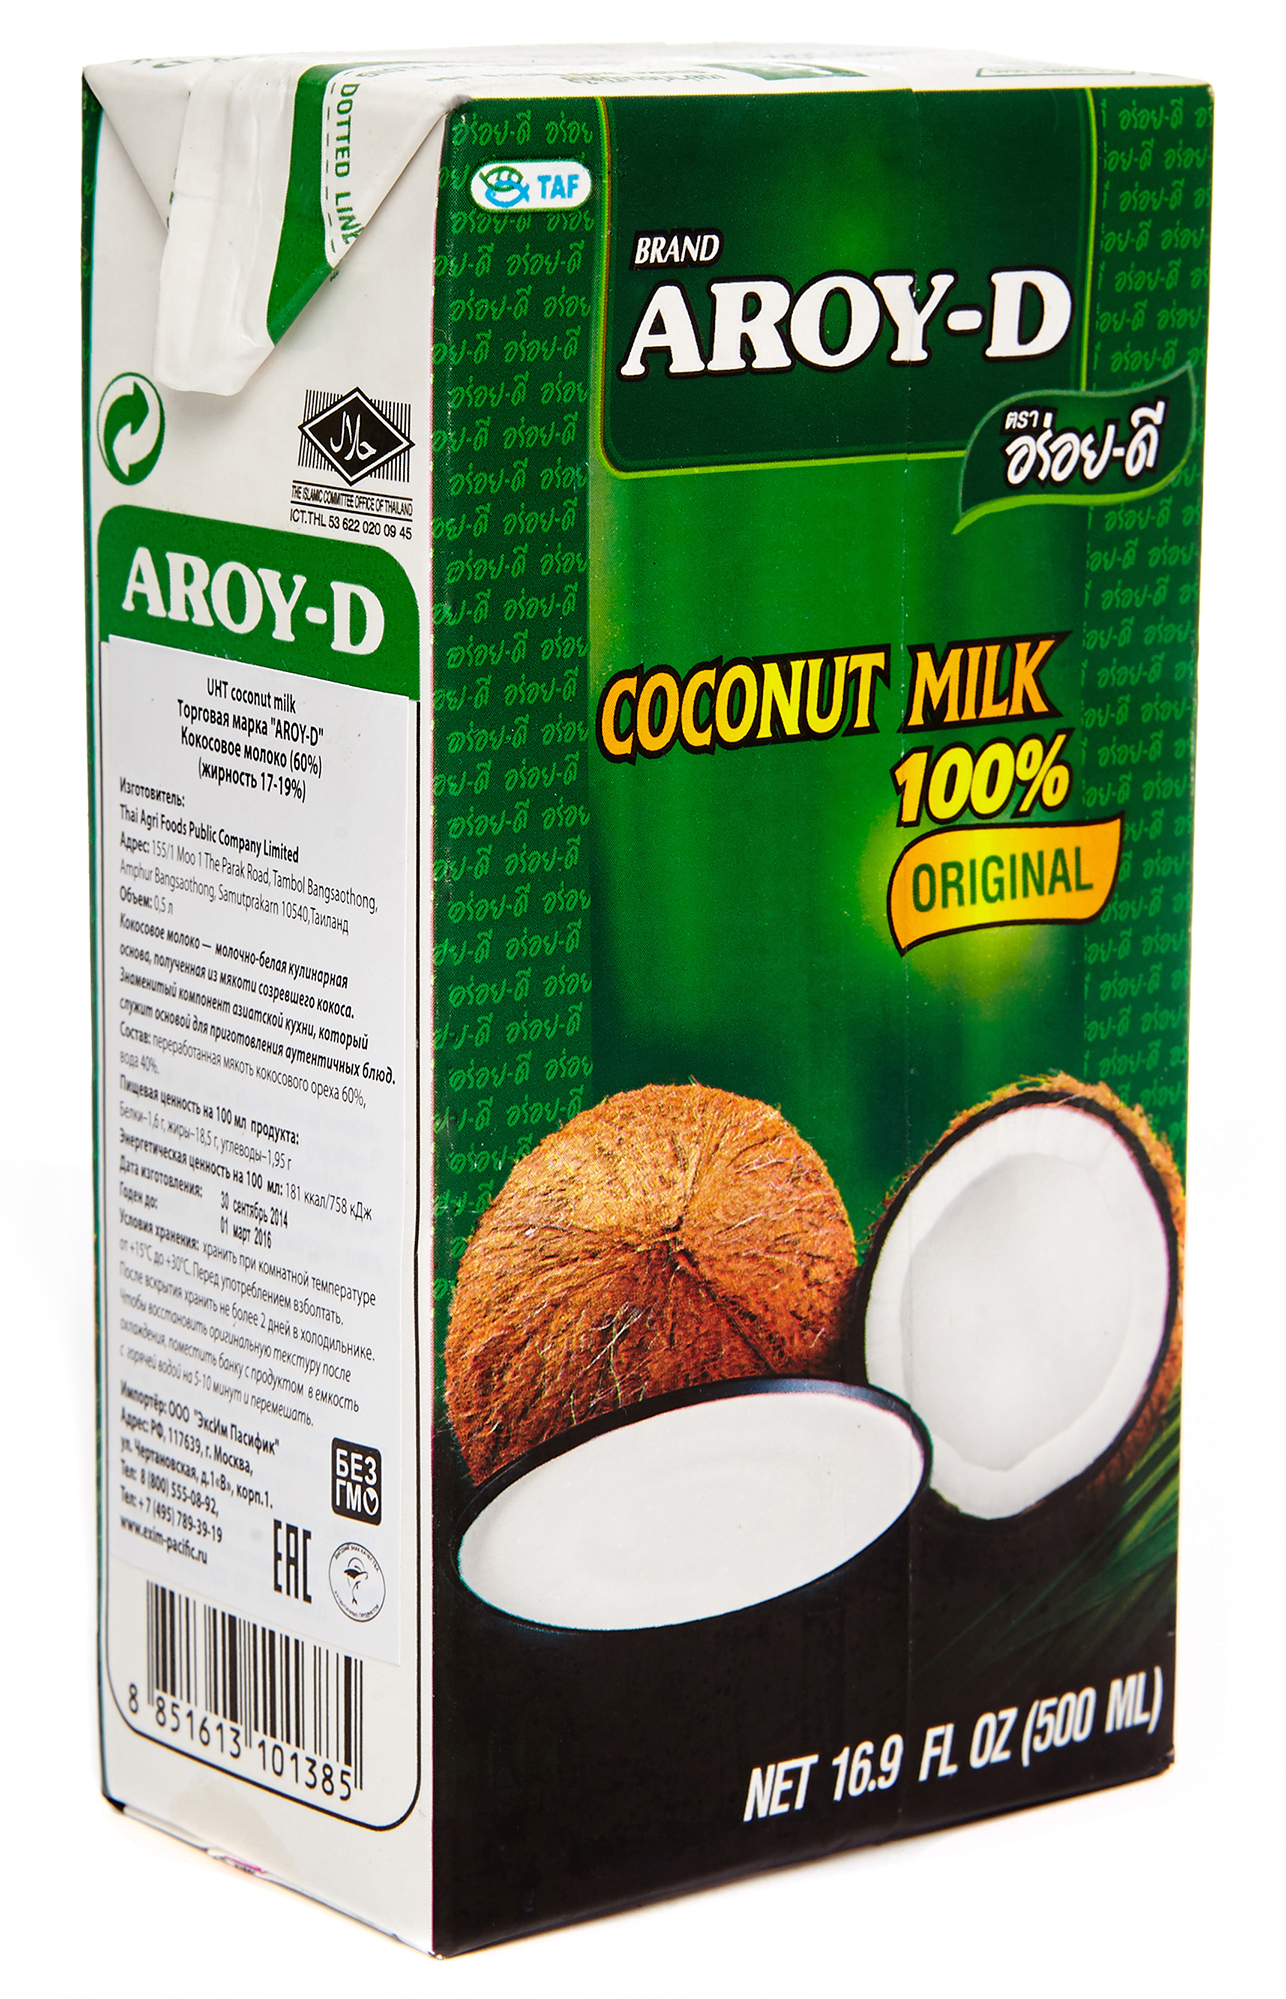 Планто кокосовое молоко. Молоко кокосовое 17-19 % Aroy 500мл. Кокосовое молоко Арой д 500 мл. Кокосовое молоко "Aroy-d" 500 мл[Tetra Pak]. Кокосовое молоко "Aroy-d" 60% 1л Tetra Pak.